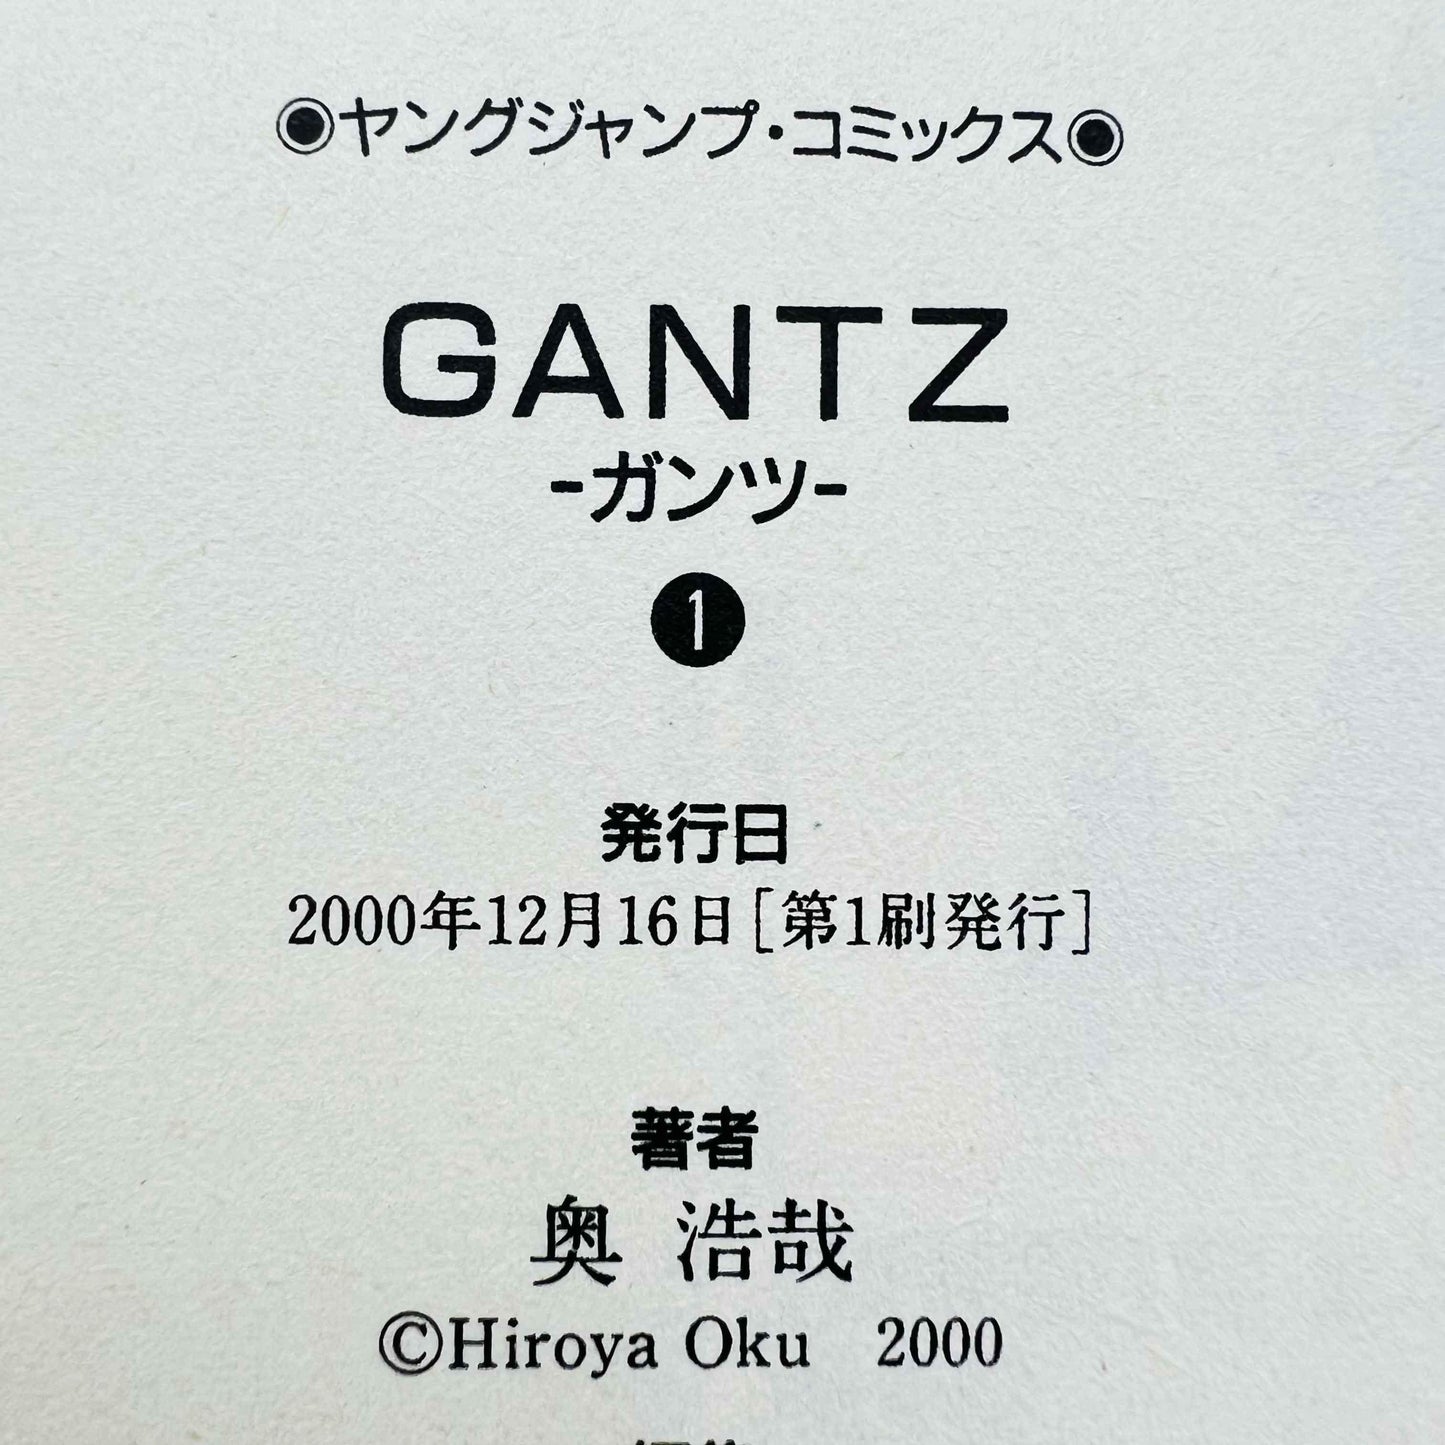 Gantz - Volume 01 - 1stPrint.net - 1st First Print Edition Manga Store - M-GANTZ-01-002